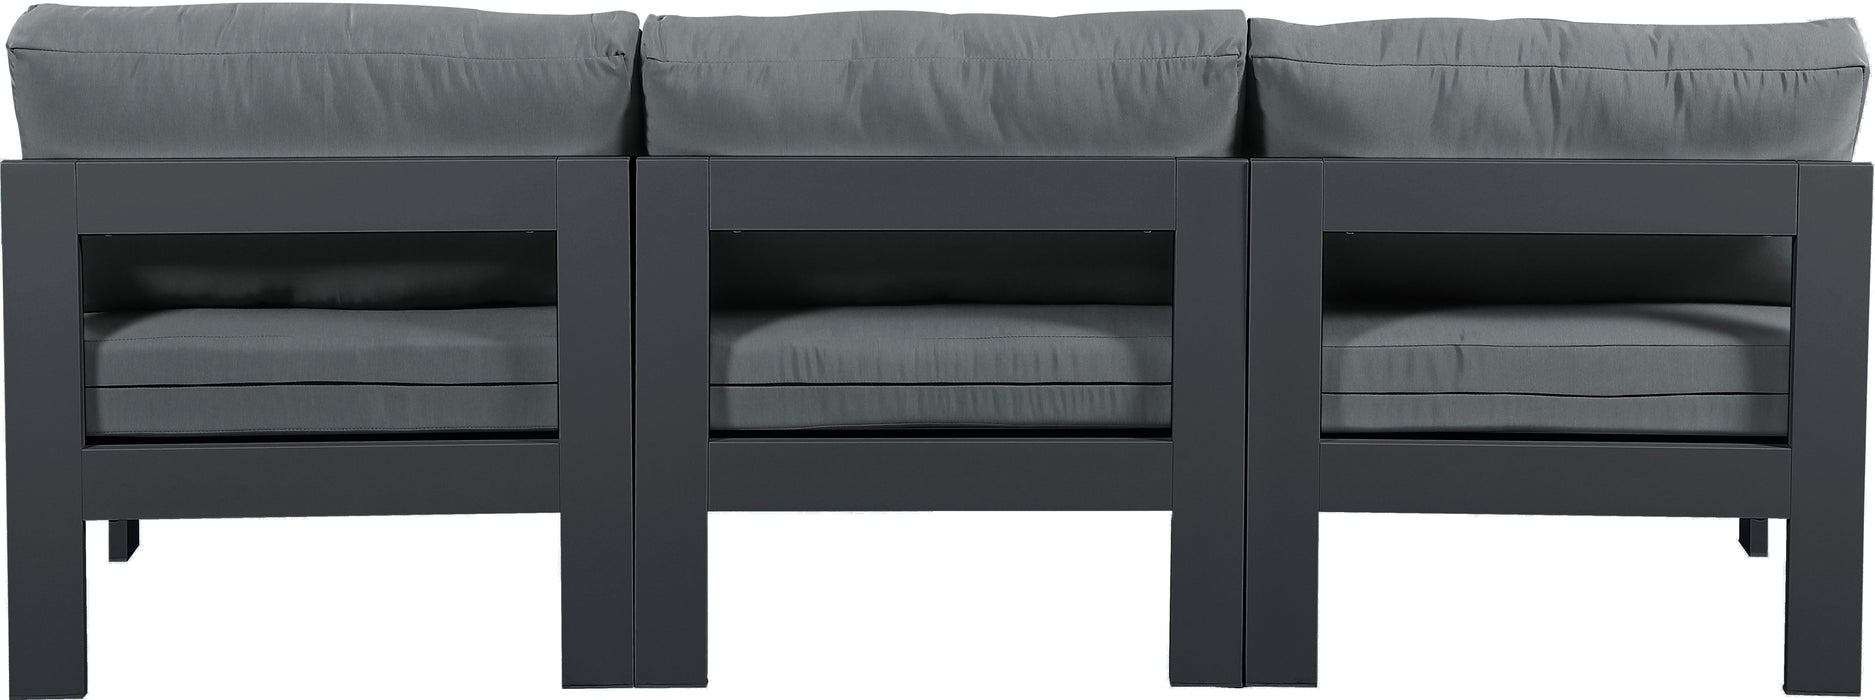 Nizuc - Outdoor Patio Modular Sofa - Grey